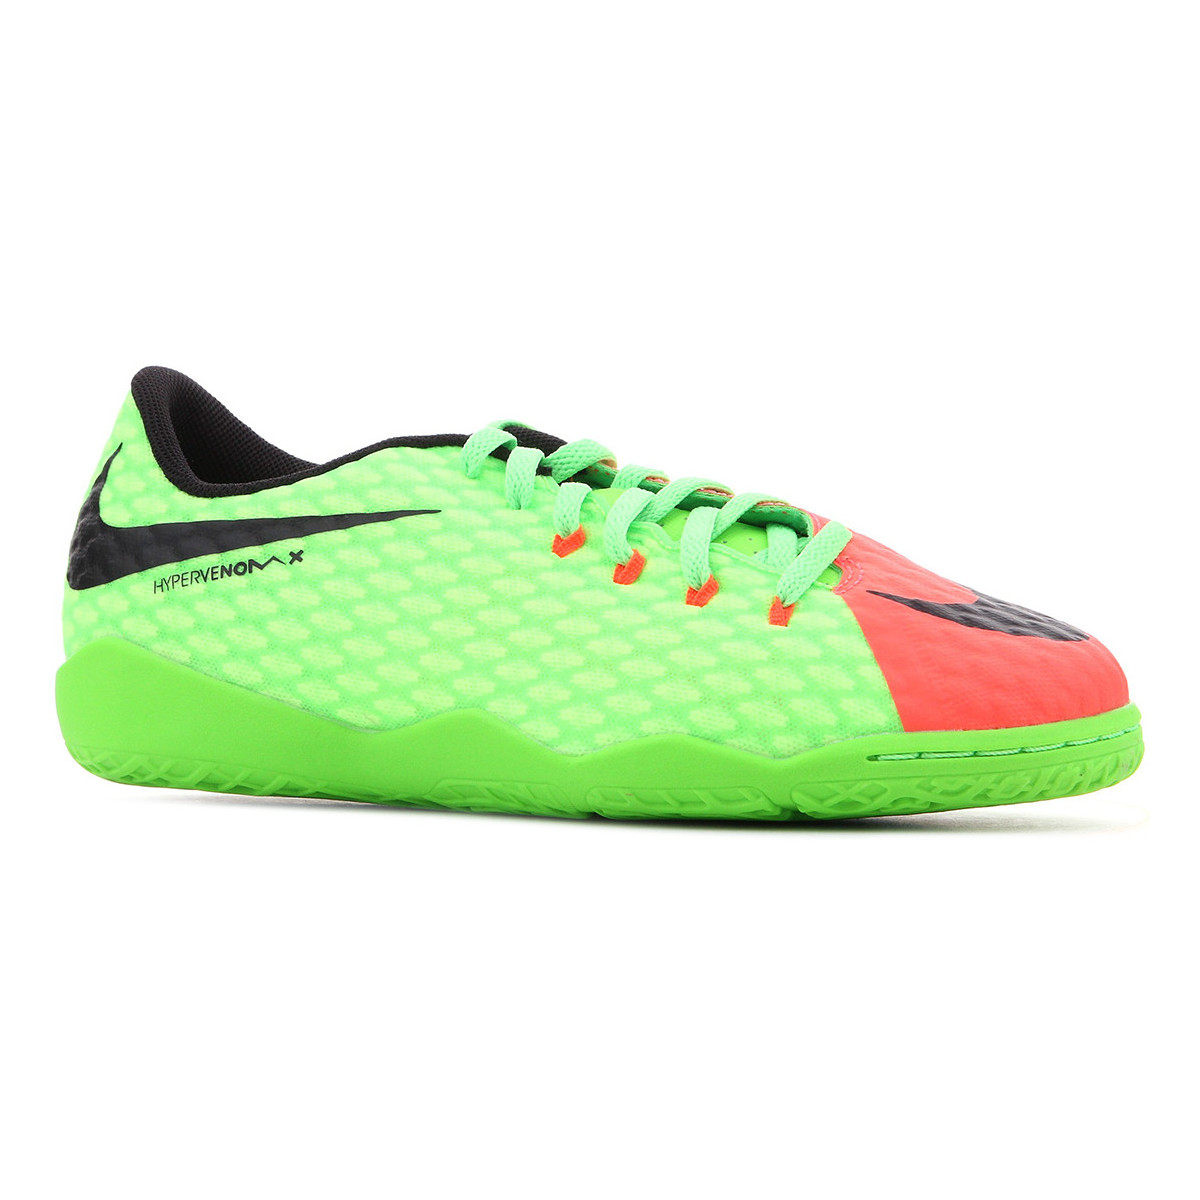 Zapatos Niños Sandalias Nike JR Hypervenomx Phelon III IC 852600 308 Multicolor